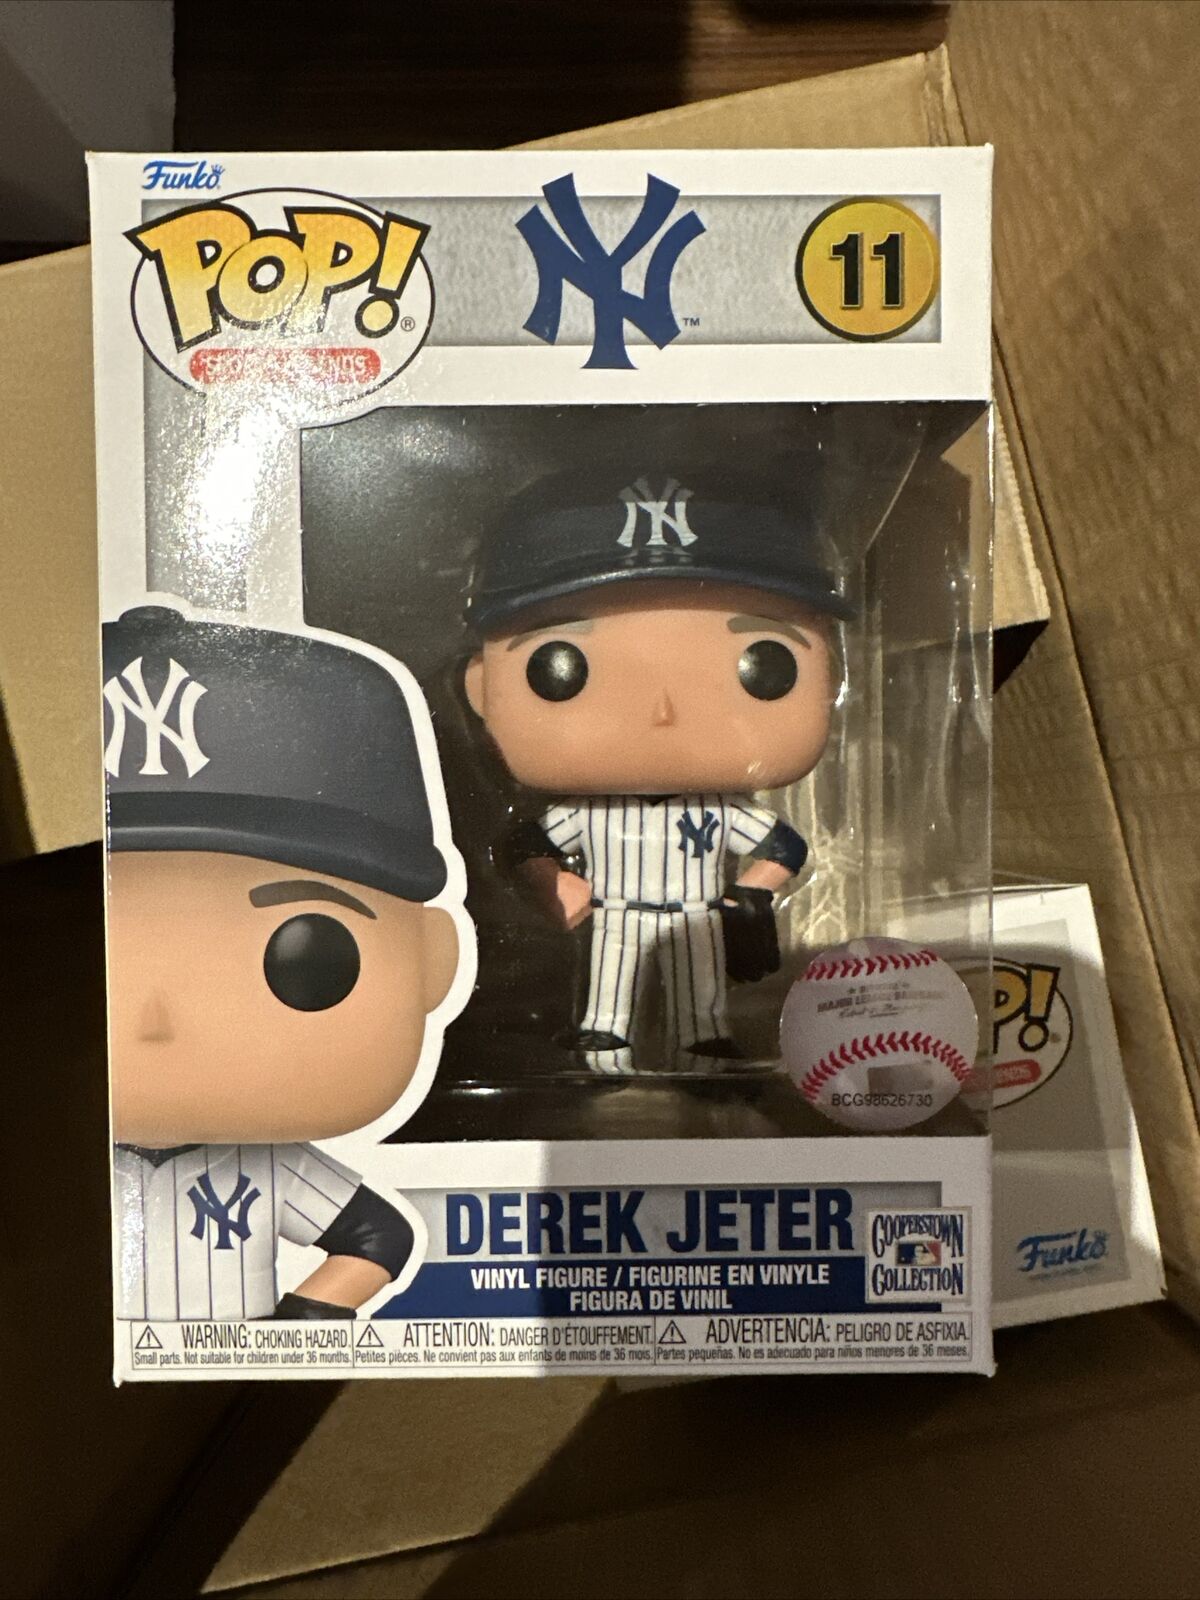 Funko Pop  Sports Legends Derek Jeter #11 New York Yankees Includes Protector